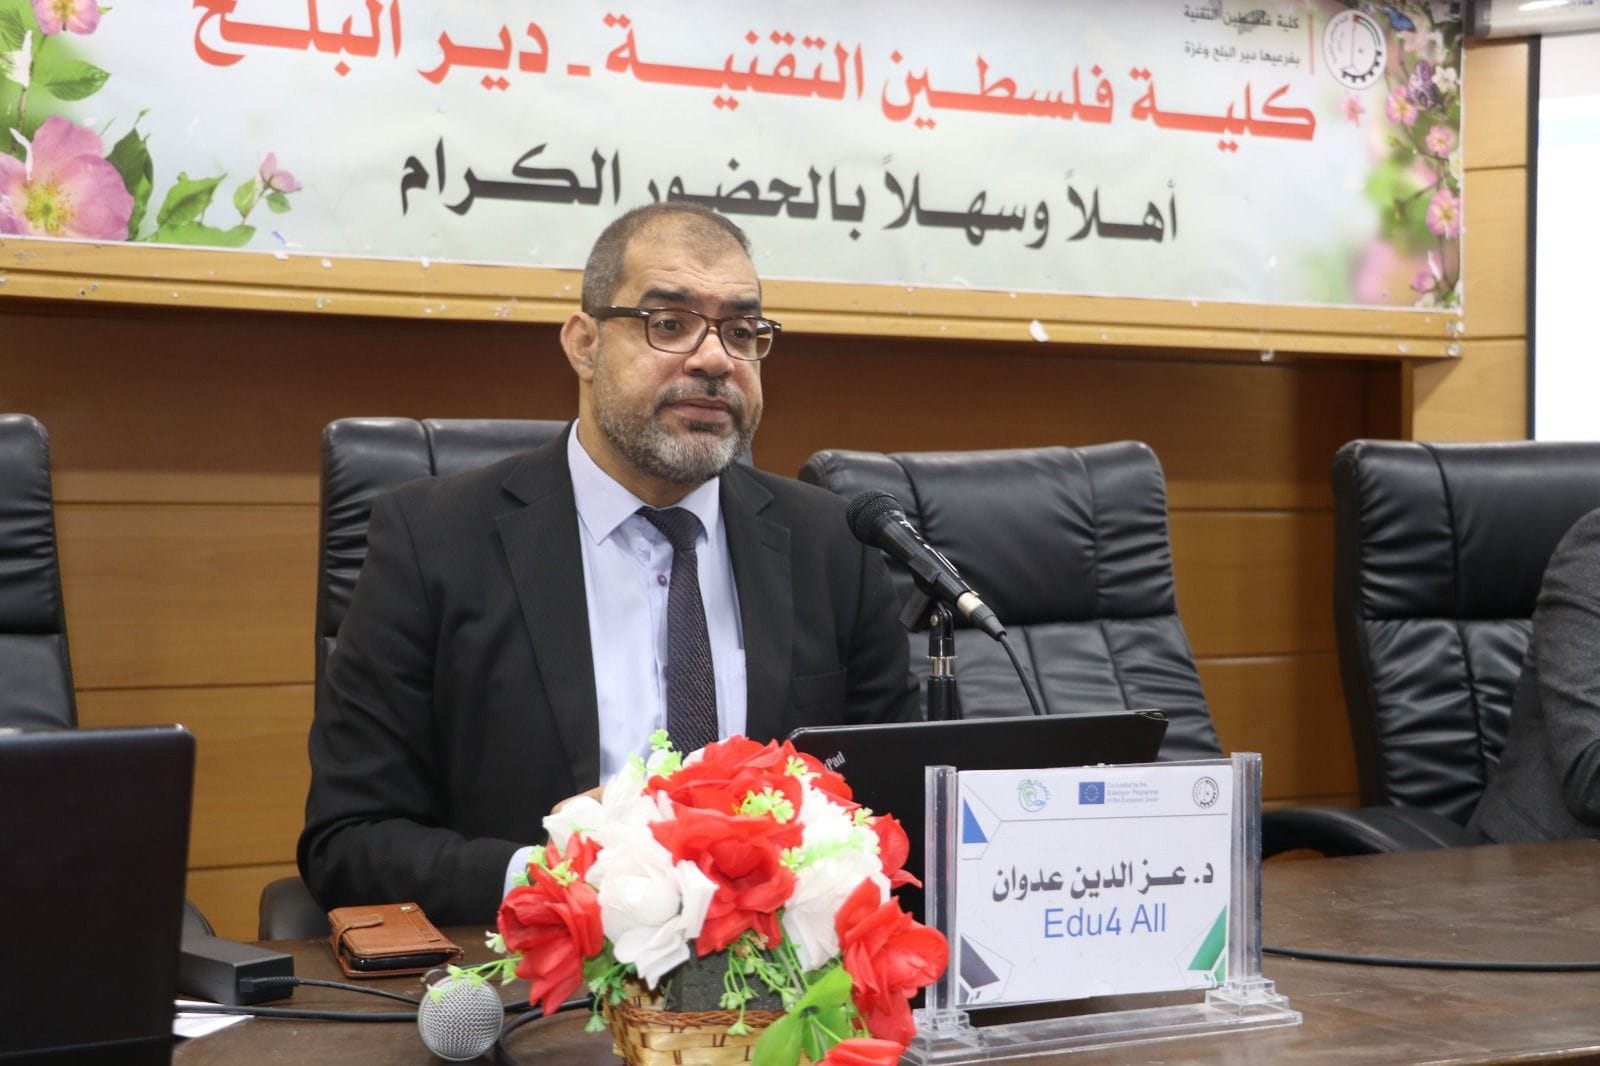 Dr. Ezzadin Adwan